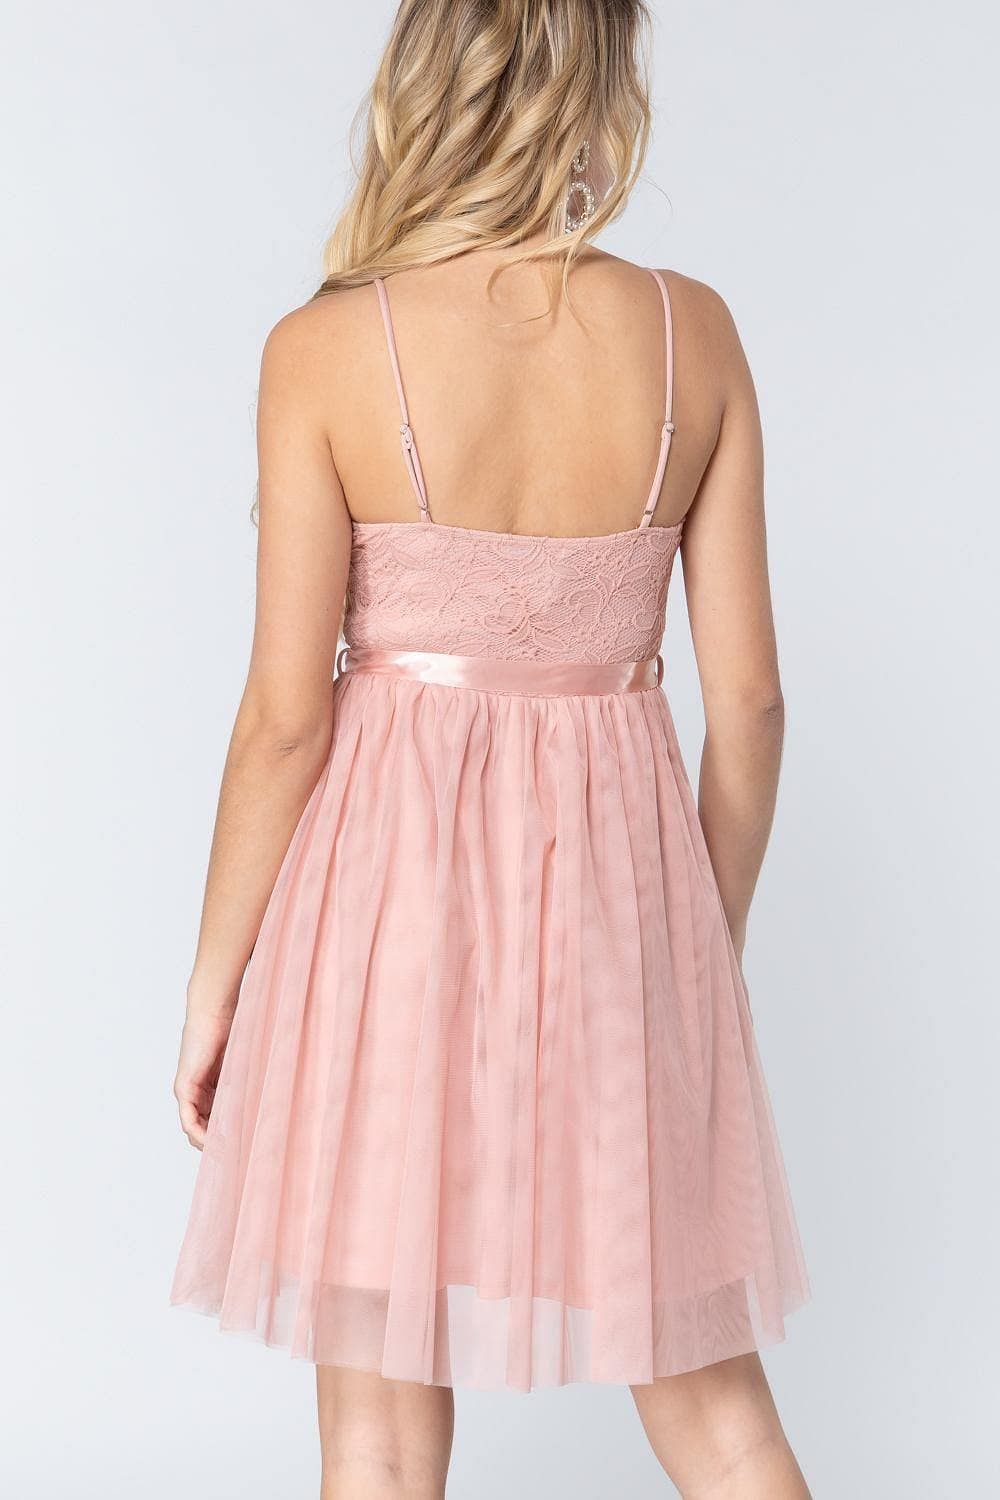 Pink Spaghetti Strap Cami Lace Mini Dress - Shopping Therapy Apparel & Accessories